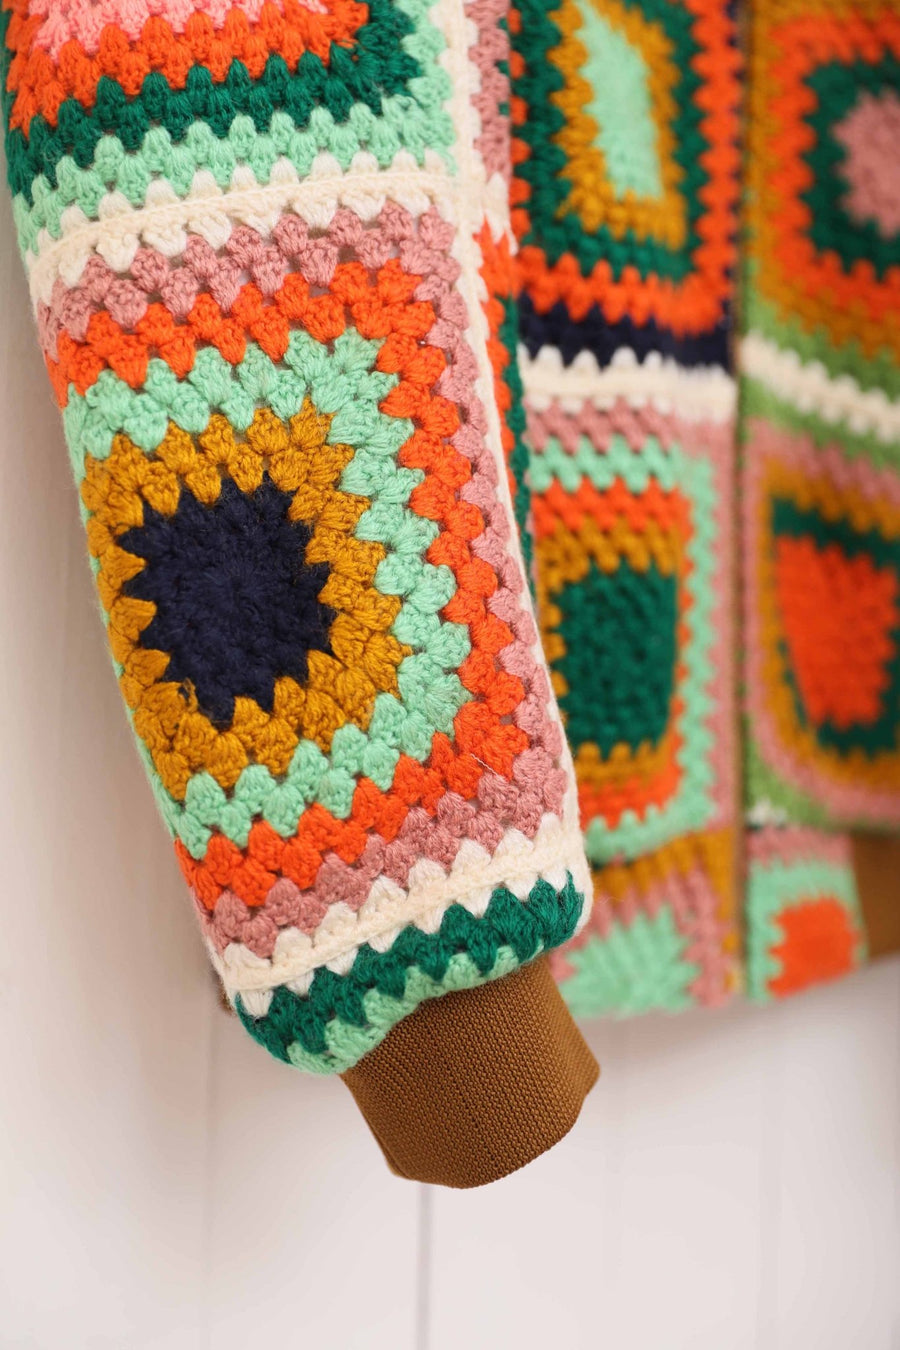 Crochet Bomber Jacket #5 - RES IPSA